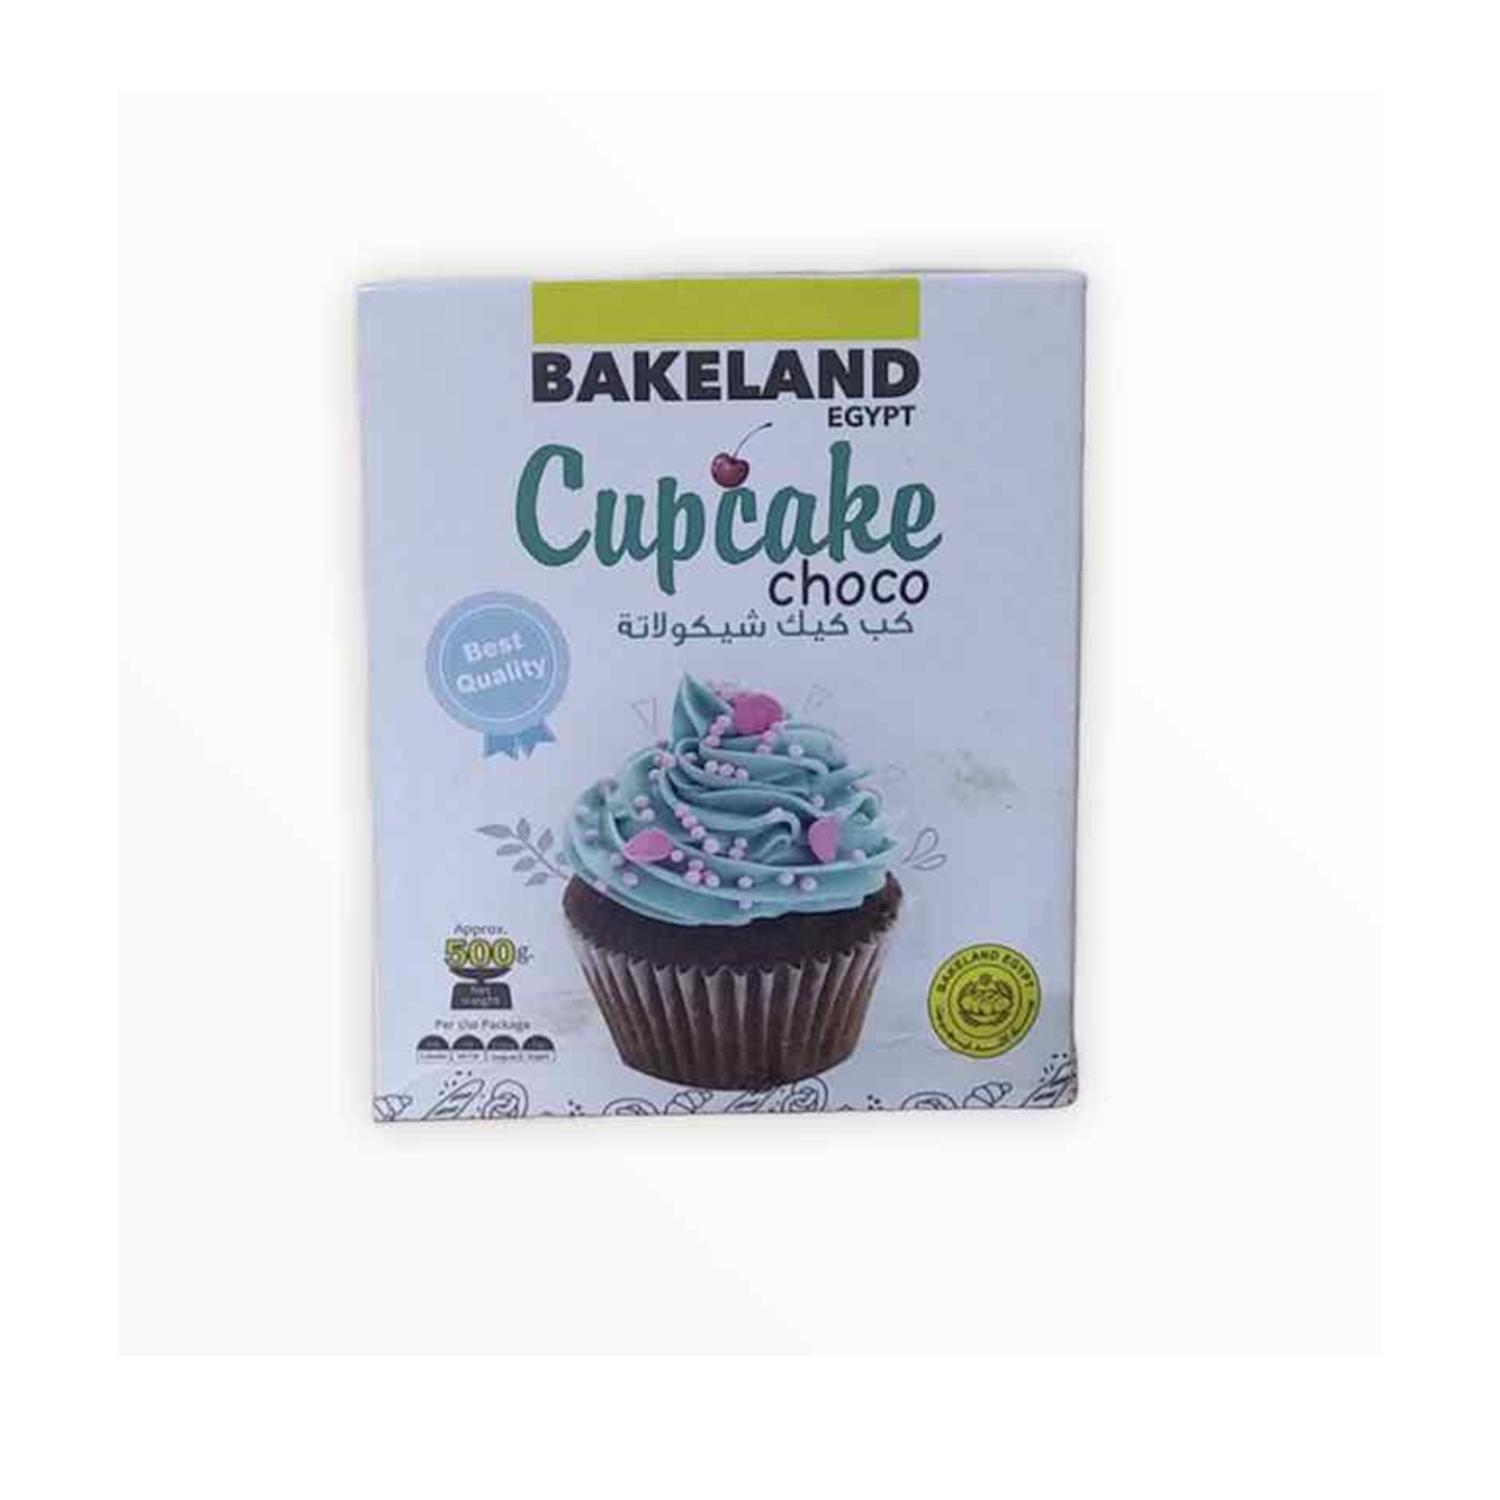 BAKELAND CUP CAKE CHOCO CAKE MIX 500GMS